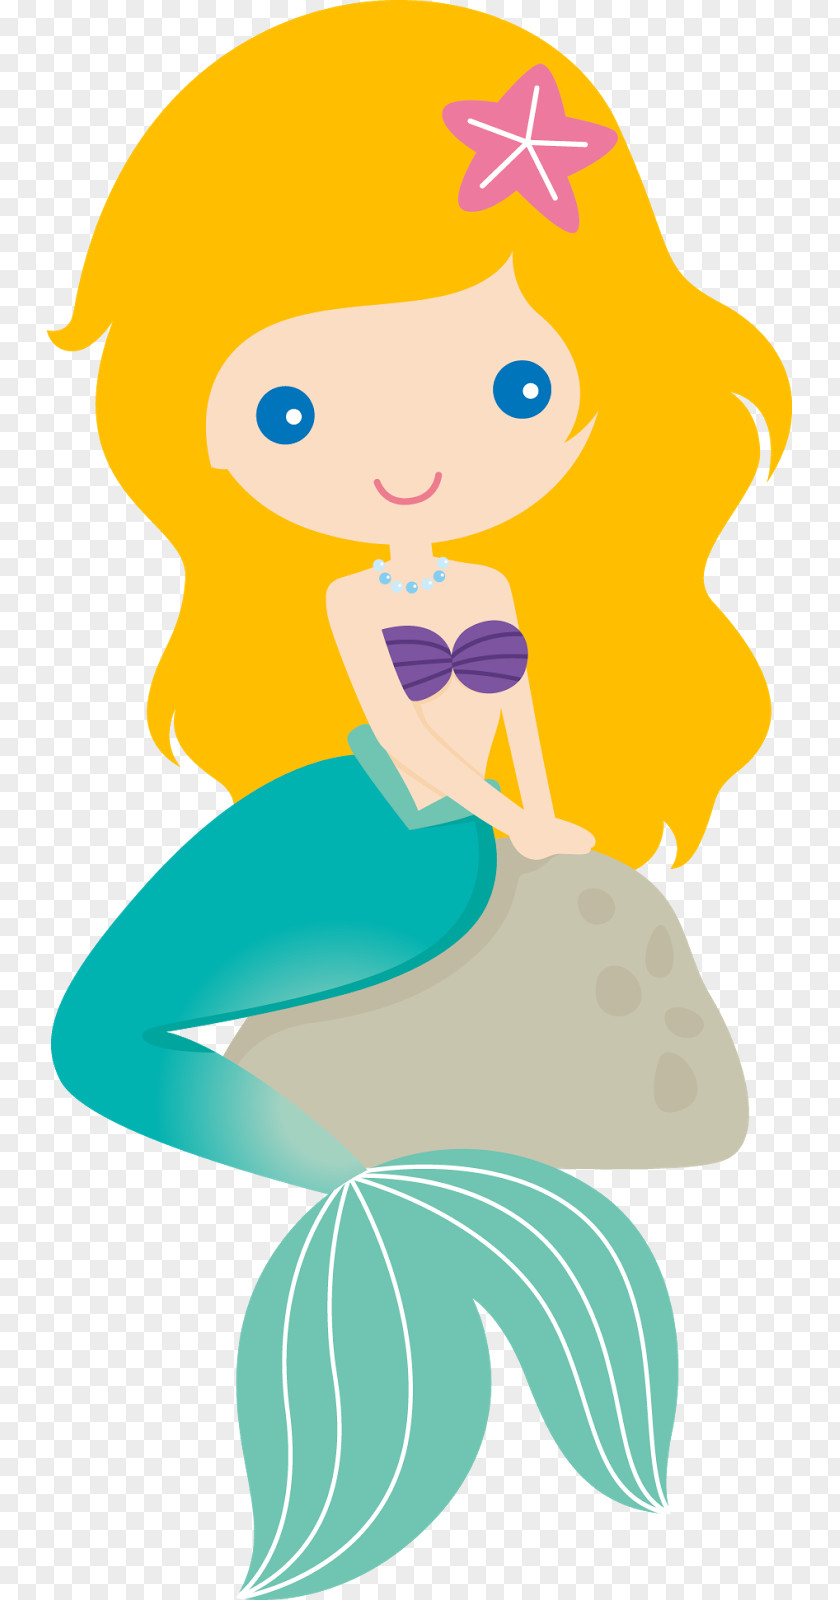 Baby Disney Princess Ariel The Little Mermaid Clip Art PNG